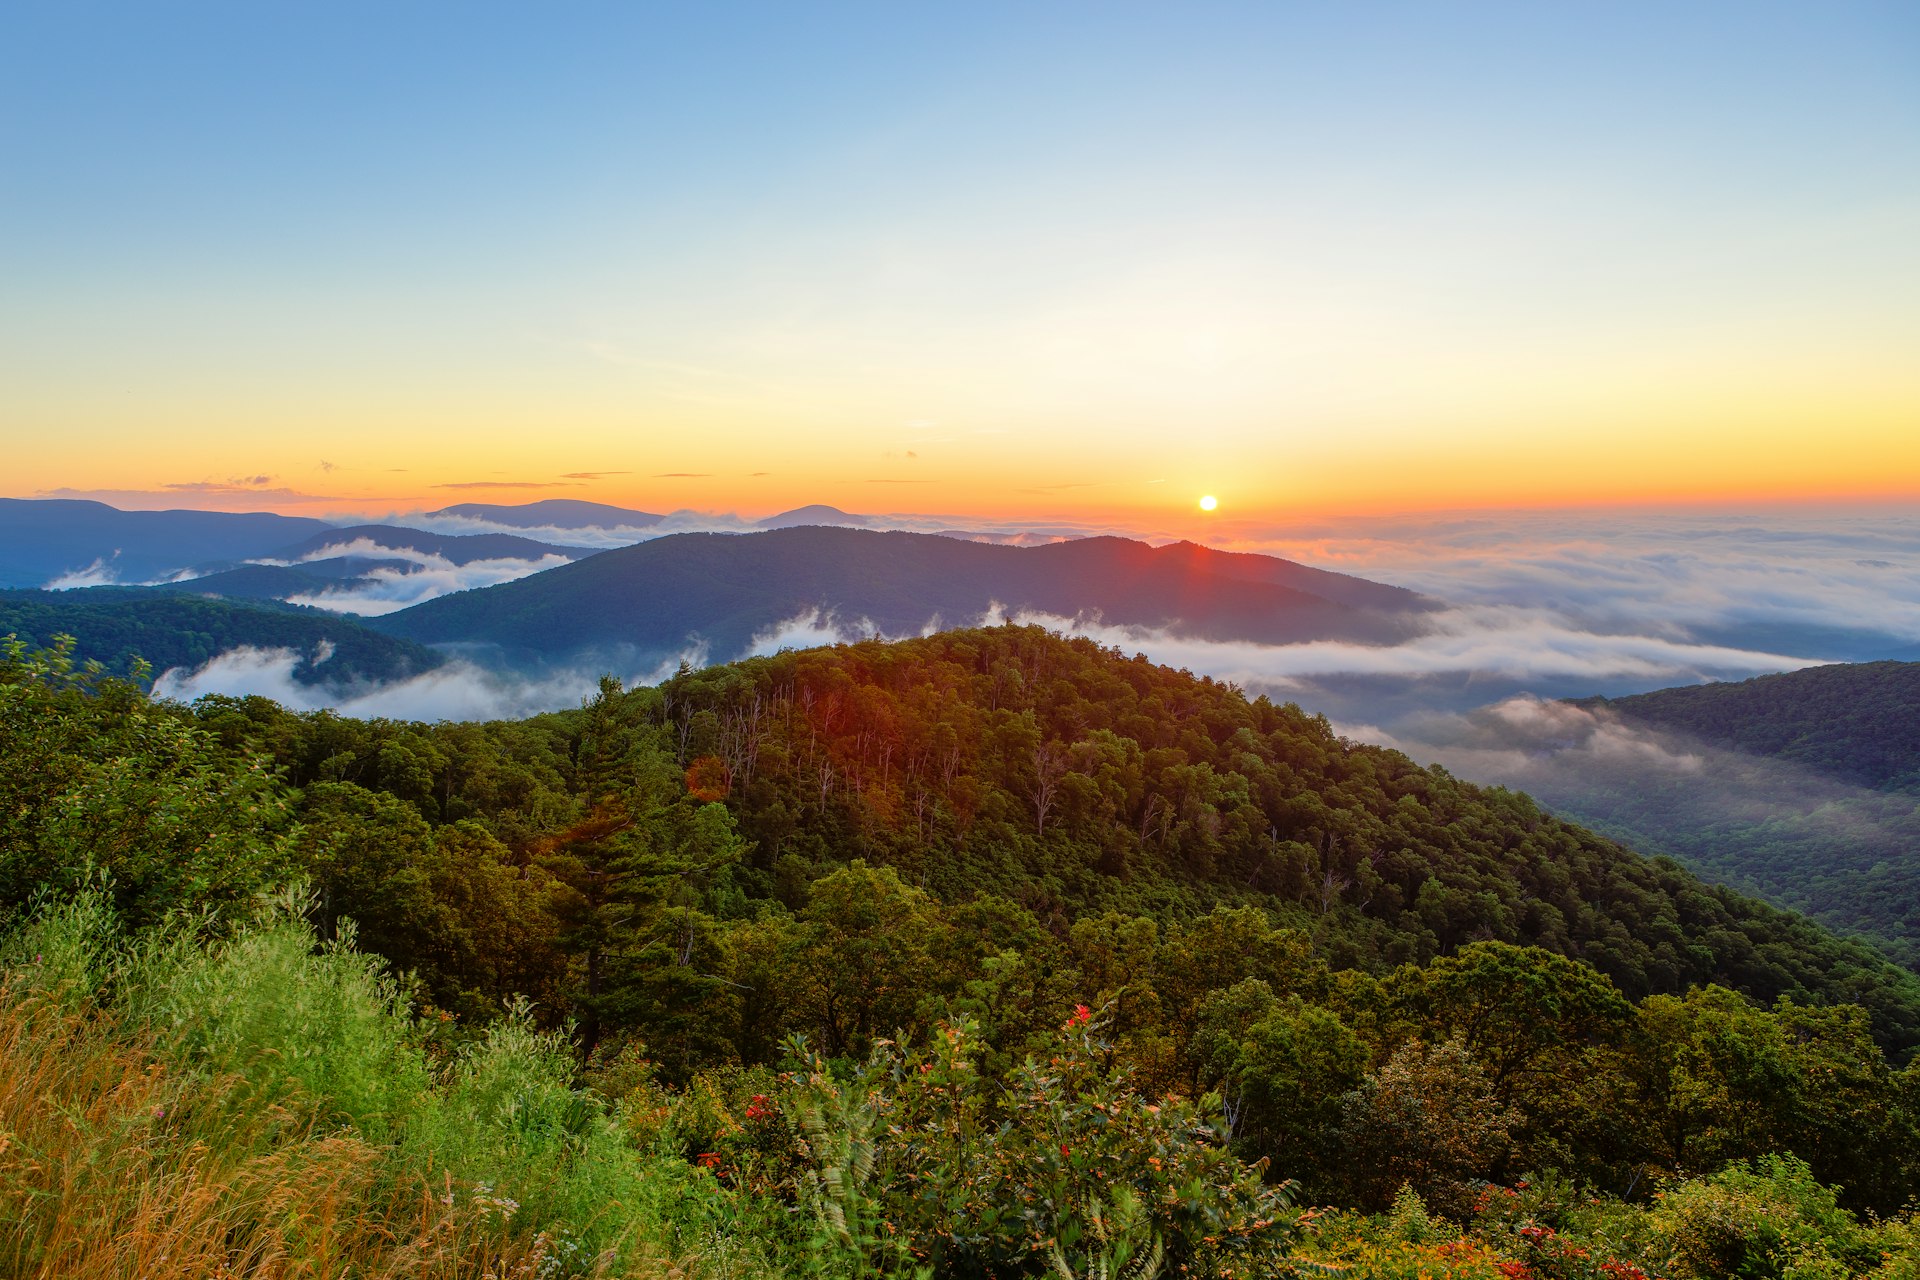 Sunrise behind the mountains of Shenandoah National Park, Virginia